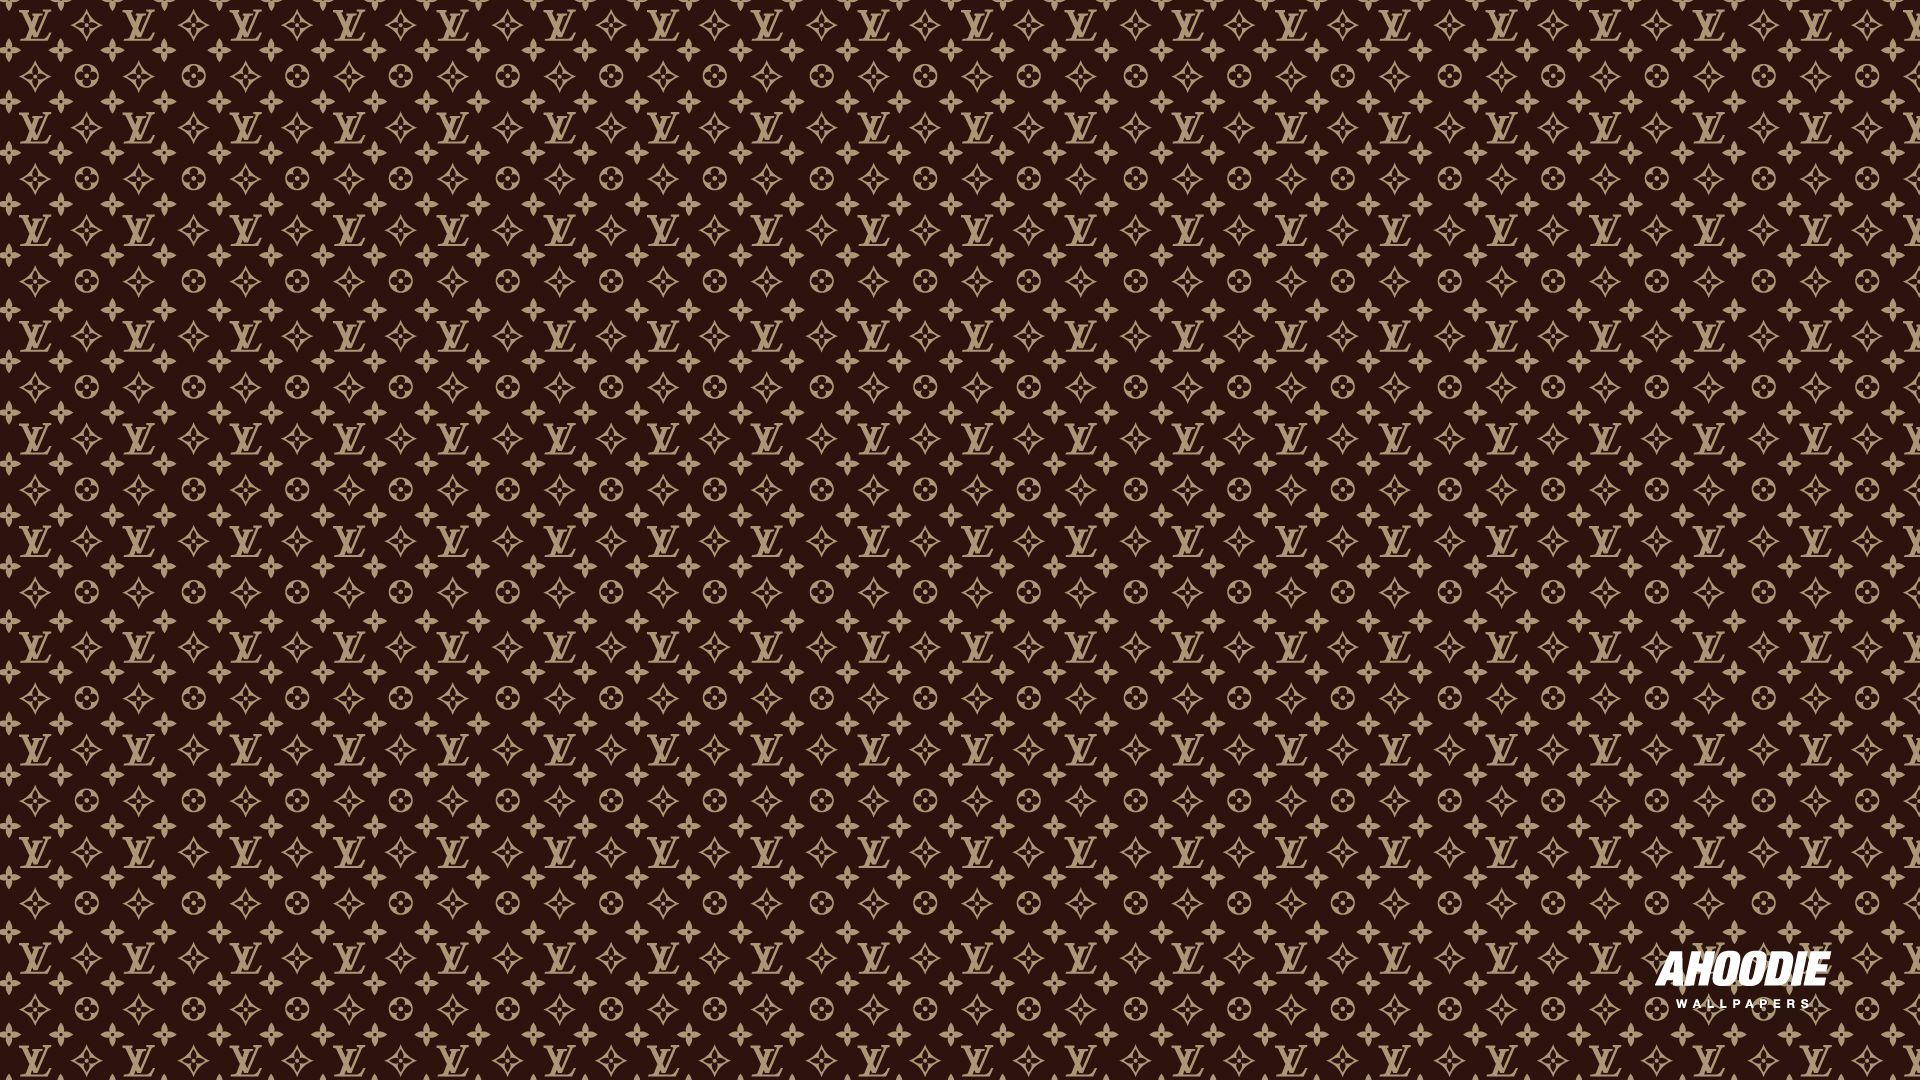 1920x1080 Hình nền Louis Vuitton.  Hình nền Louis Vuitton, Hình nền in Louis Vuitton và Hình nền nhiều màu Louis Vuitton